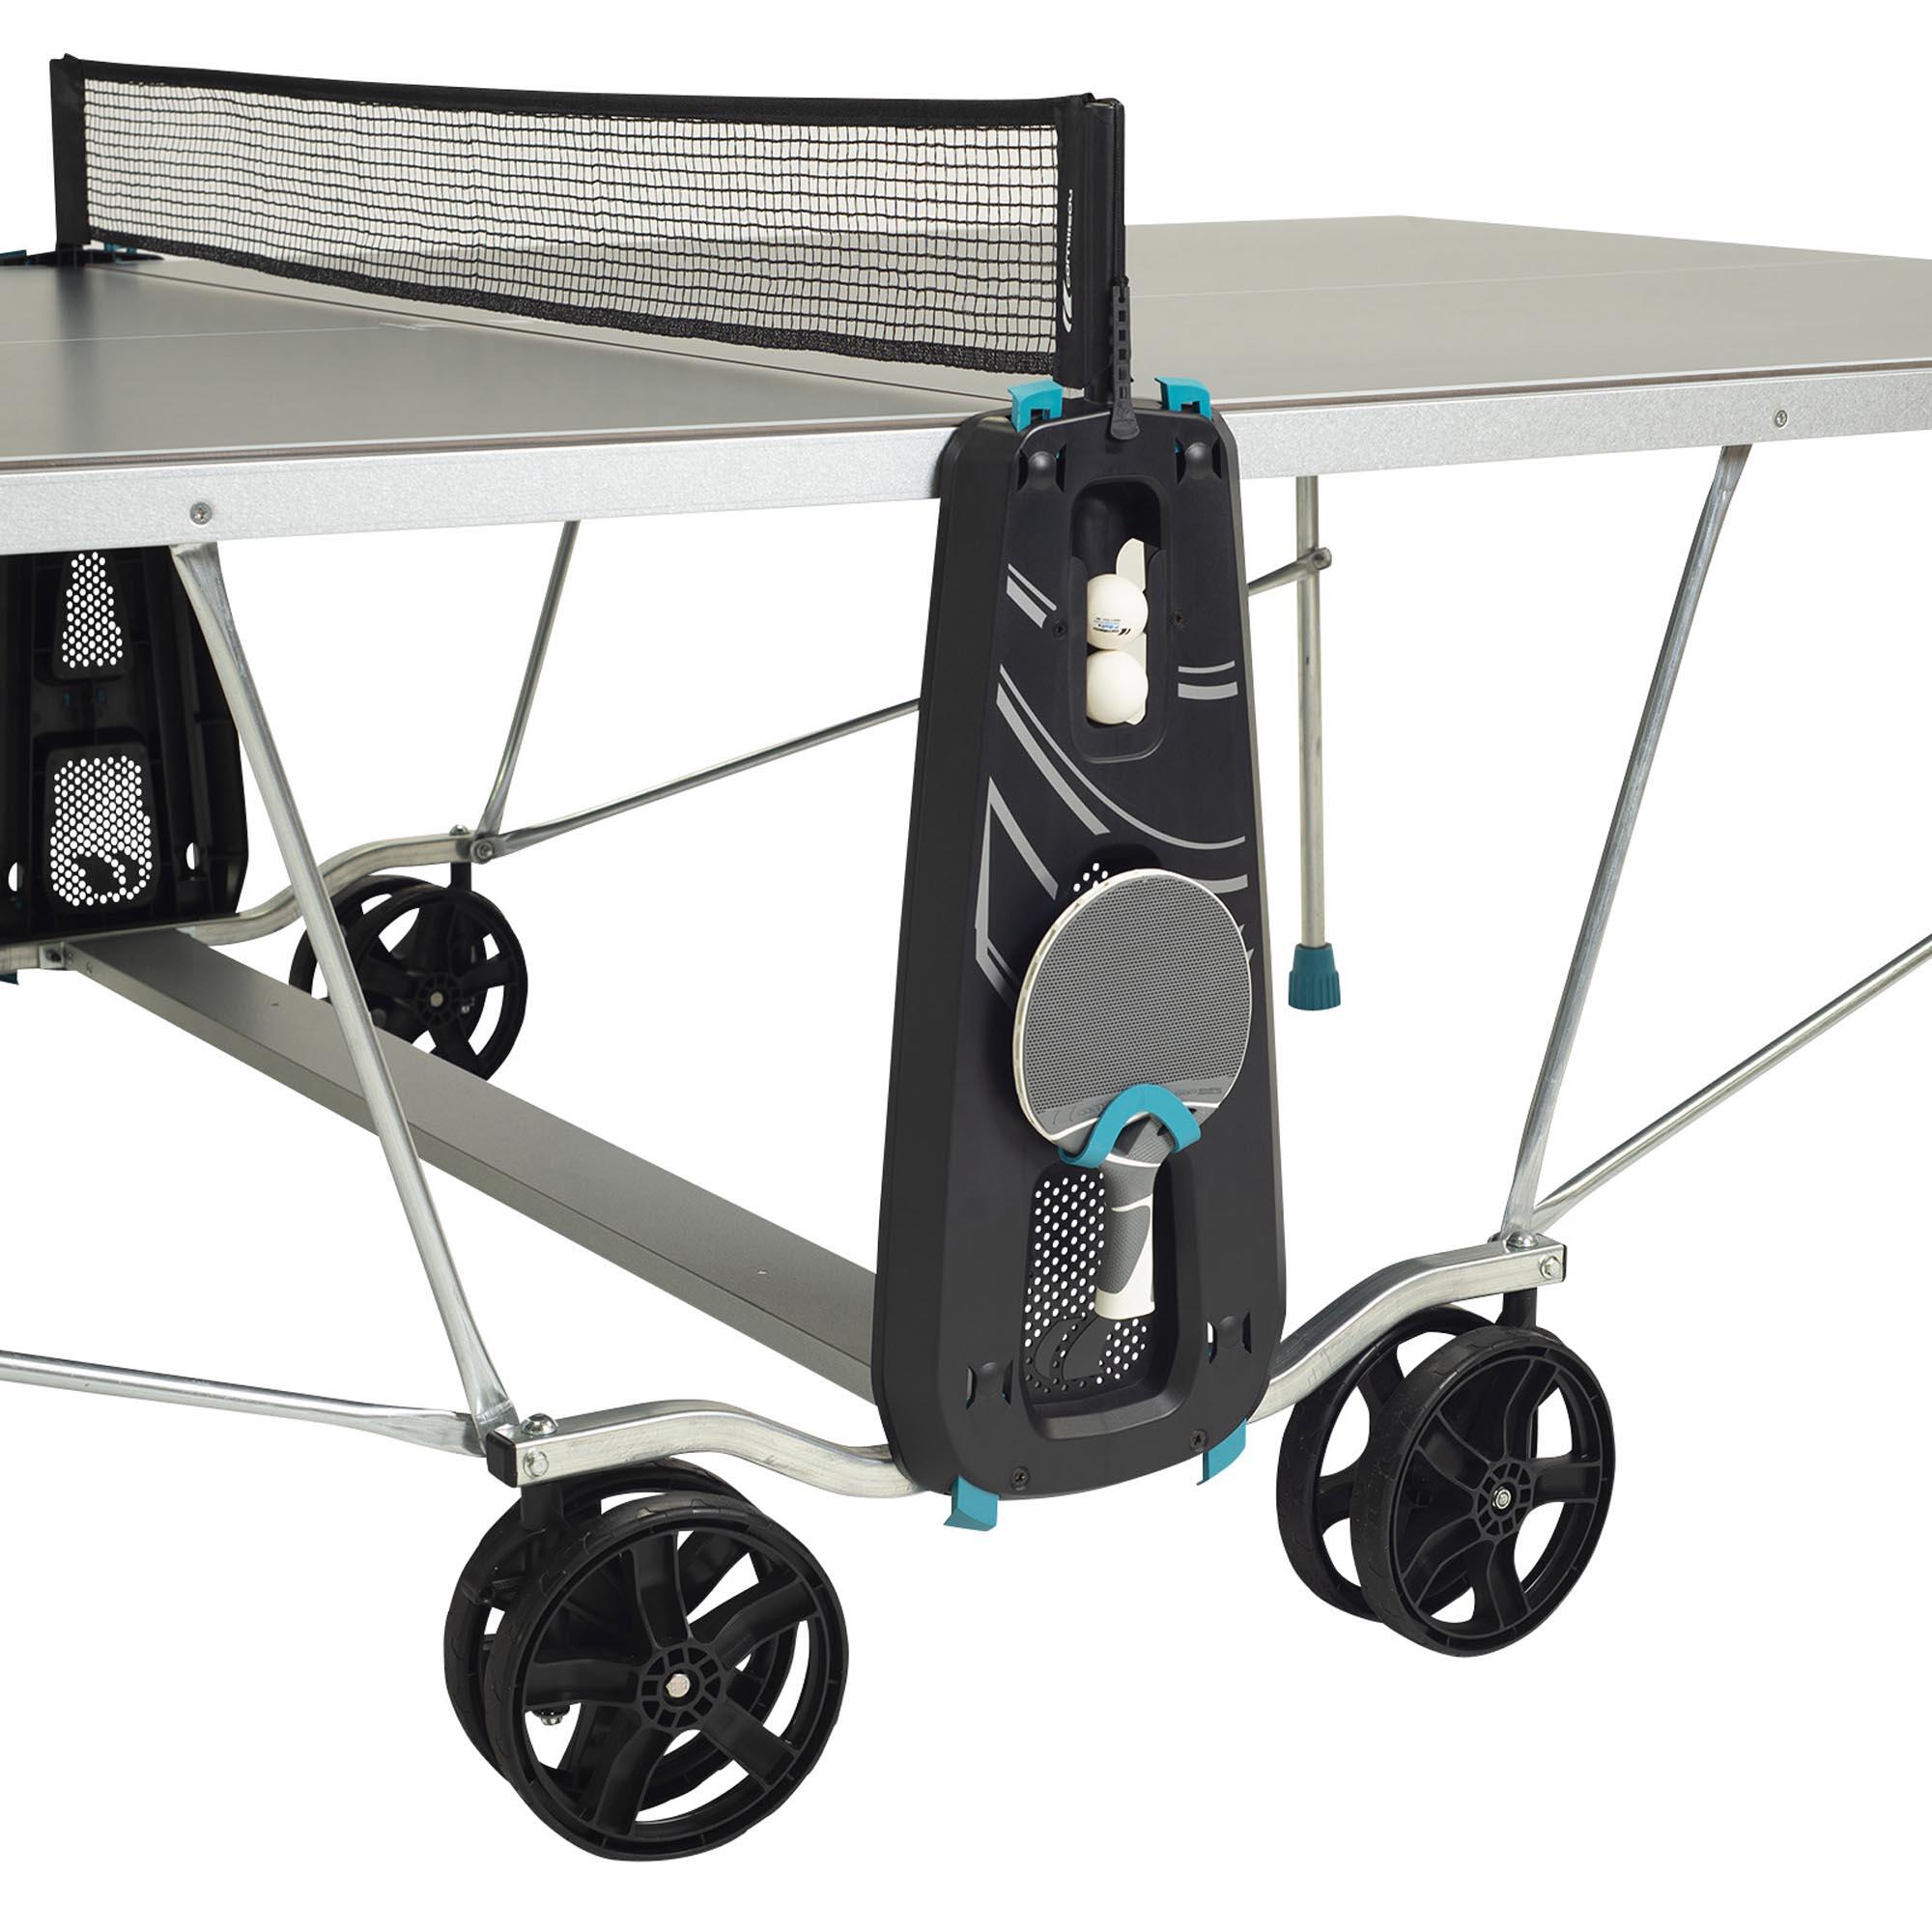 Outdoor Table Tennis Table 100X - Grey 6/17